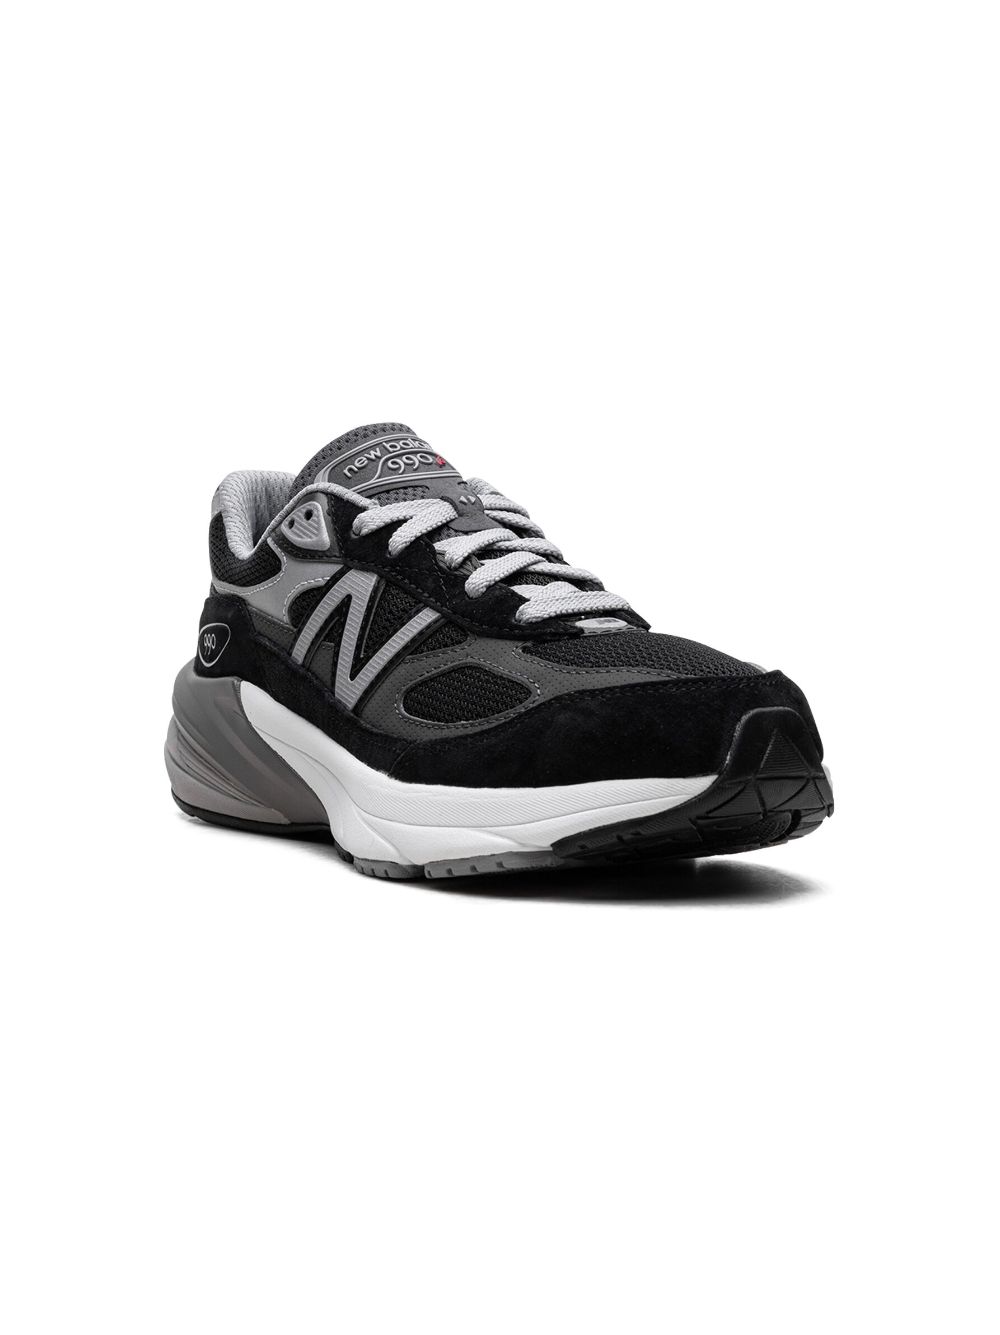 New Balance Kids 990v6 "Black/Silver" sneakers